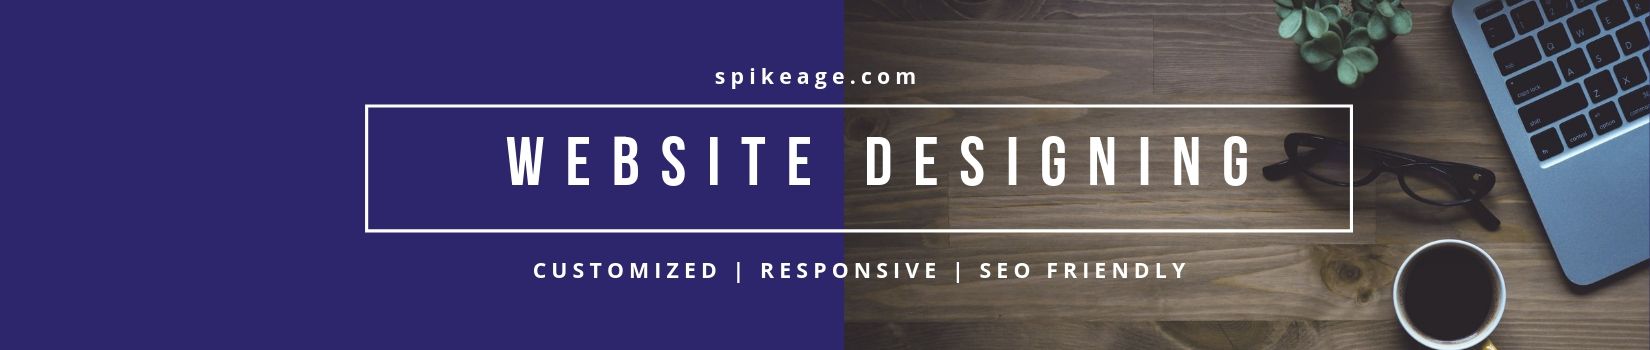 spikeage-website-design